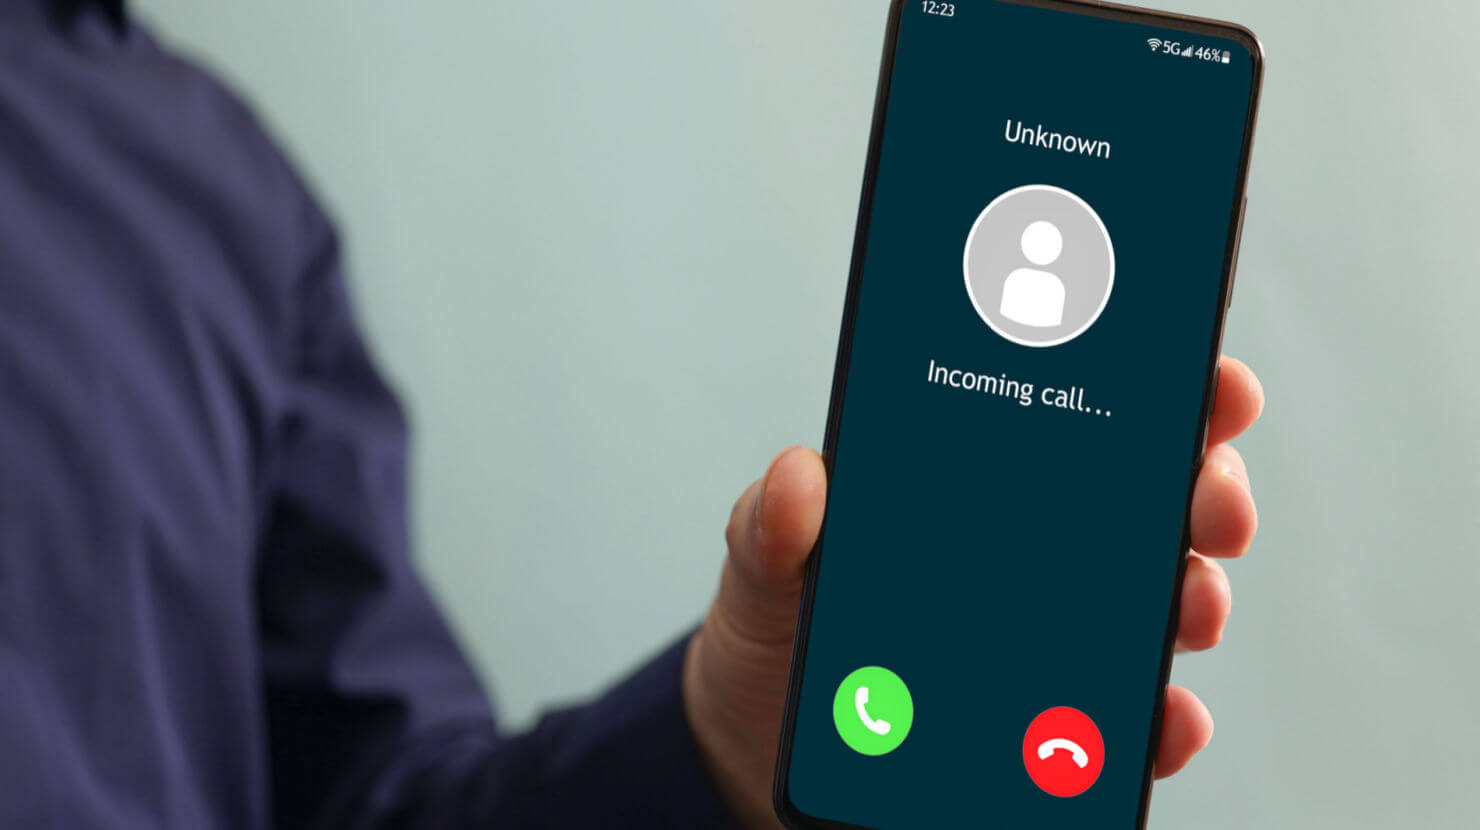 utility bill scam phone calls